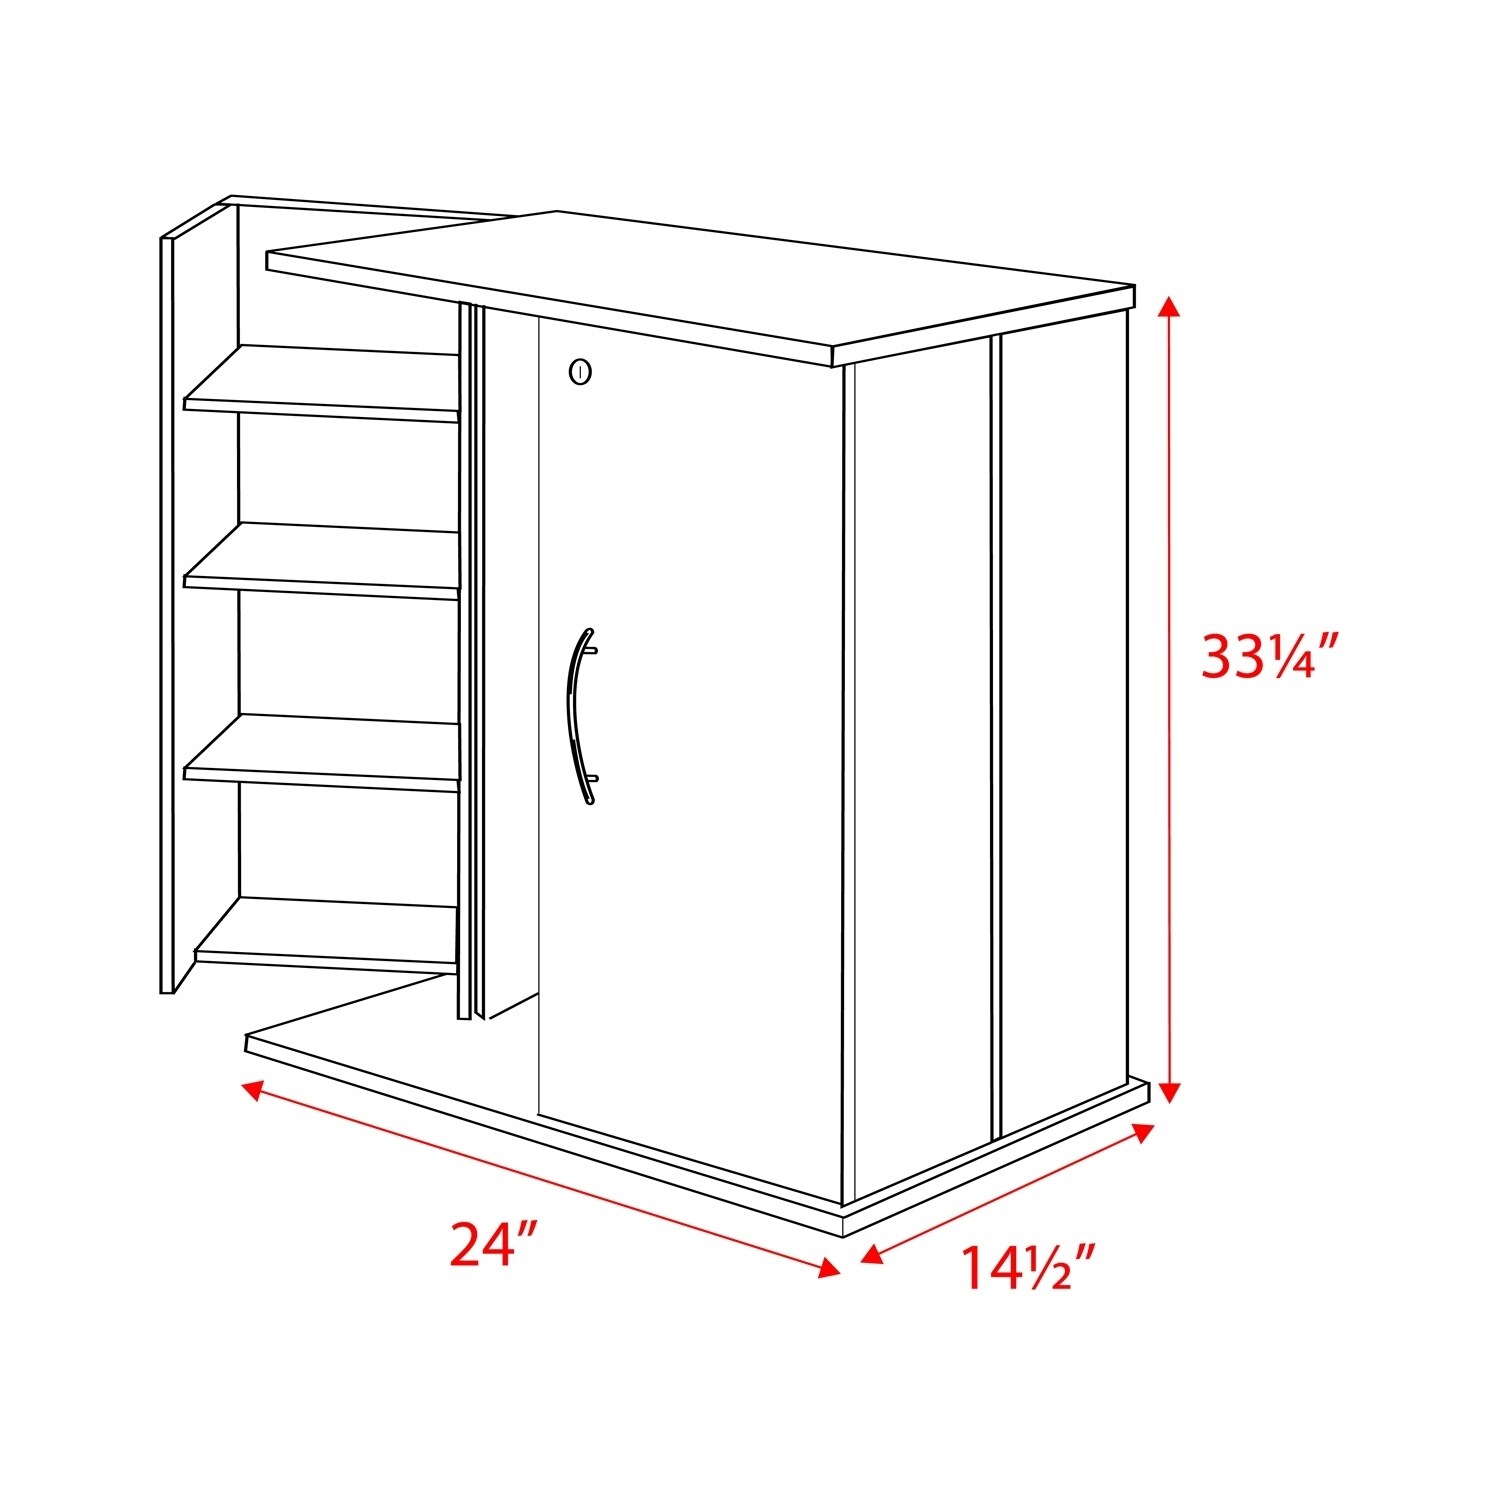 Prepac Bvs-0136 Black Small Locking Media Storage Cabinet for sale online 